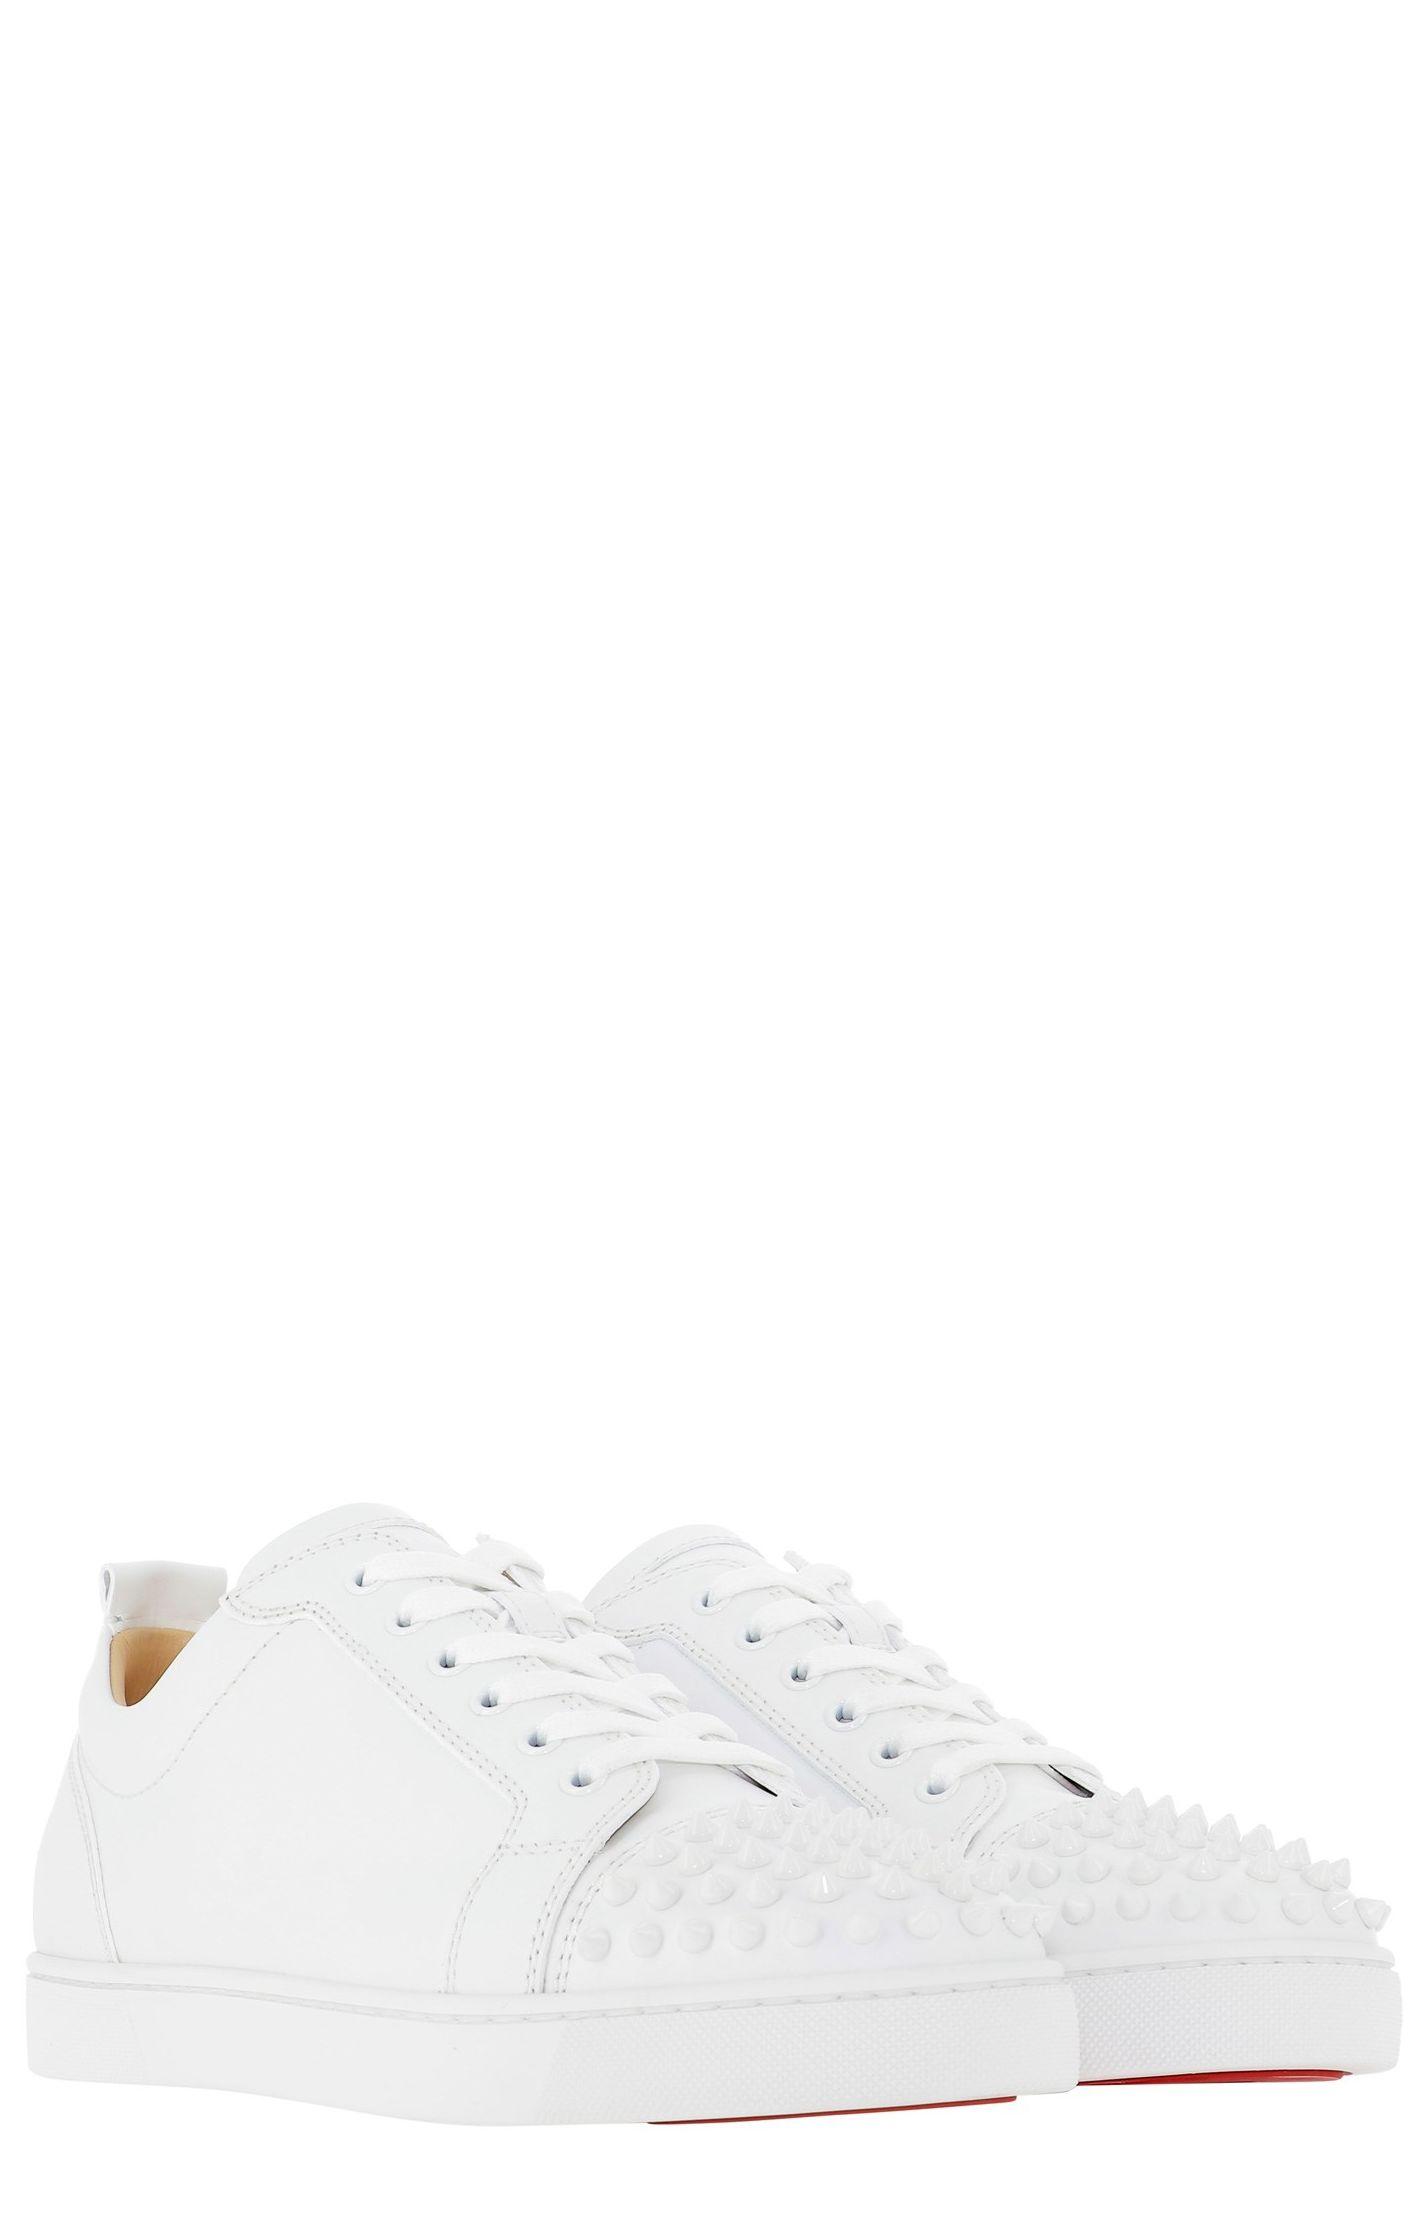 louboutin shoes white